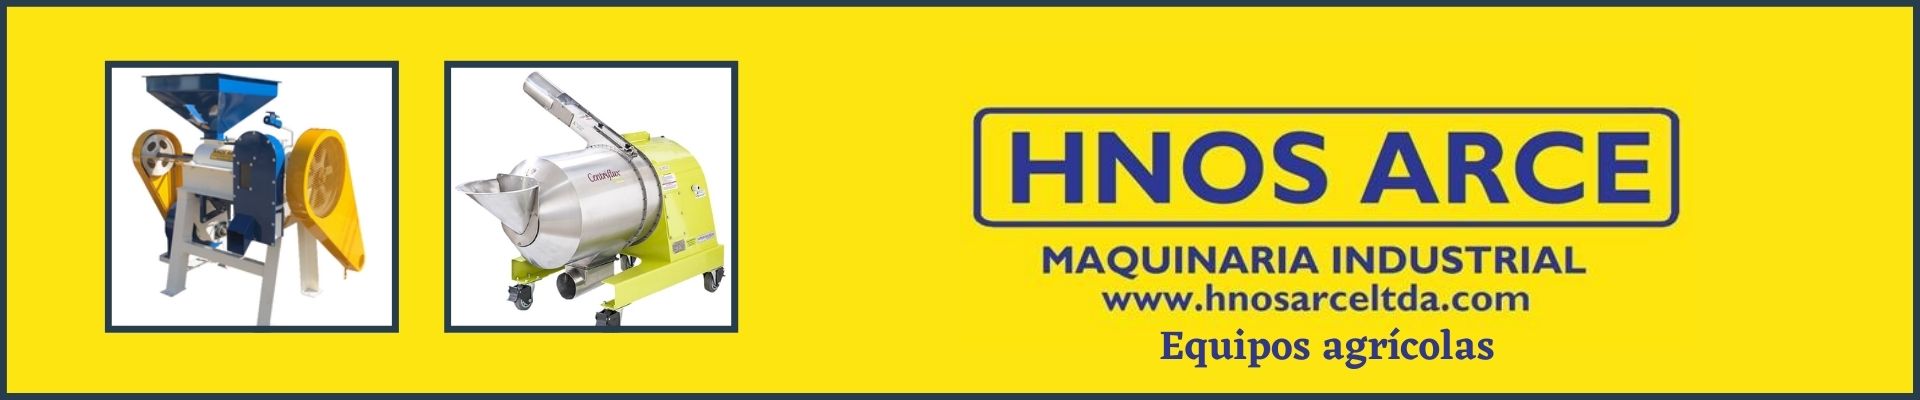 Banner Maquinaria Industrial Hnos Arce